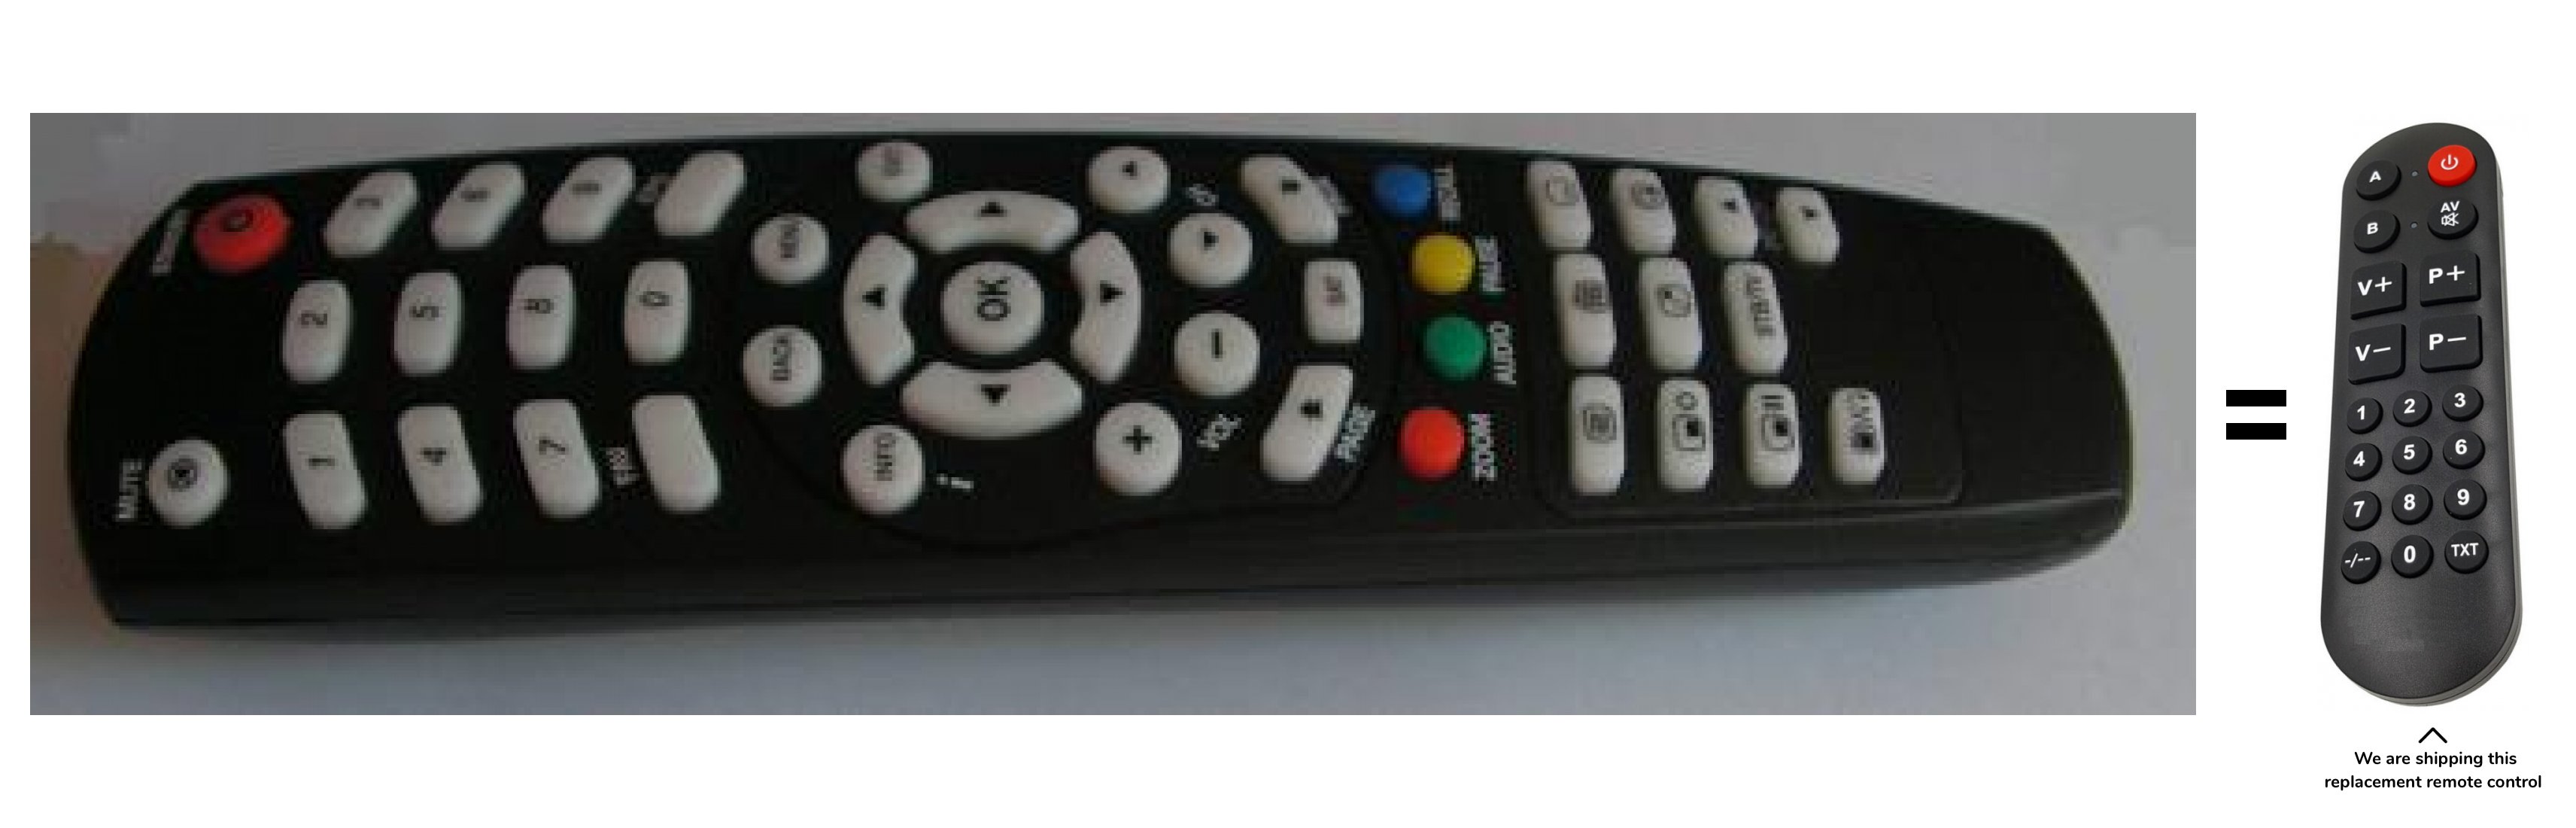 GOSAT-GS2010 remote control for seniors